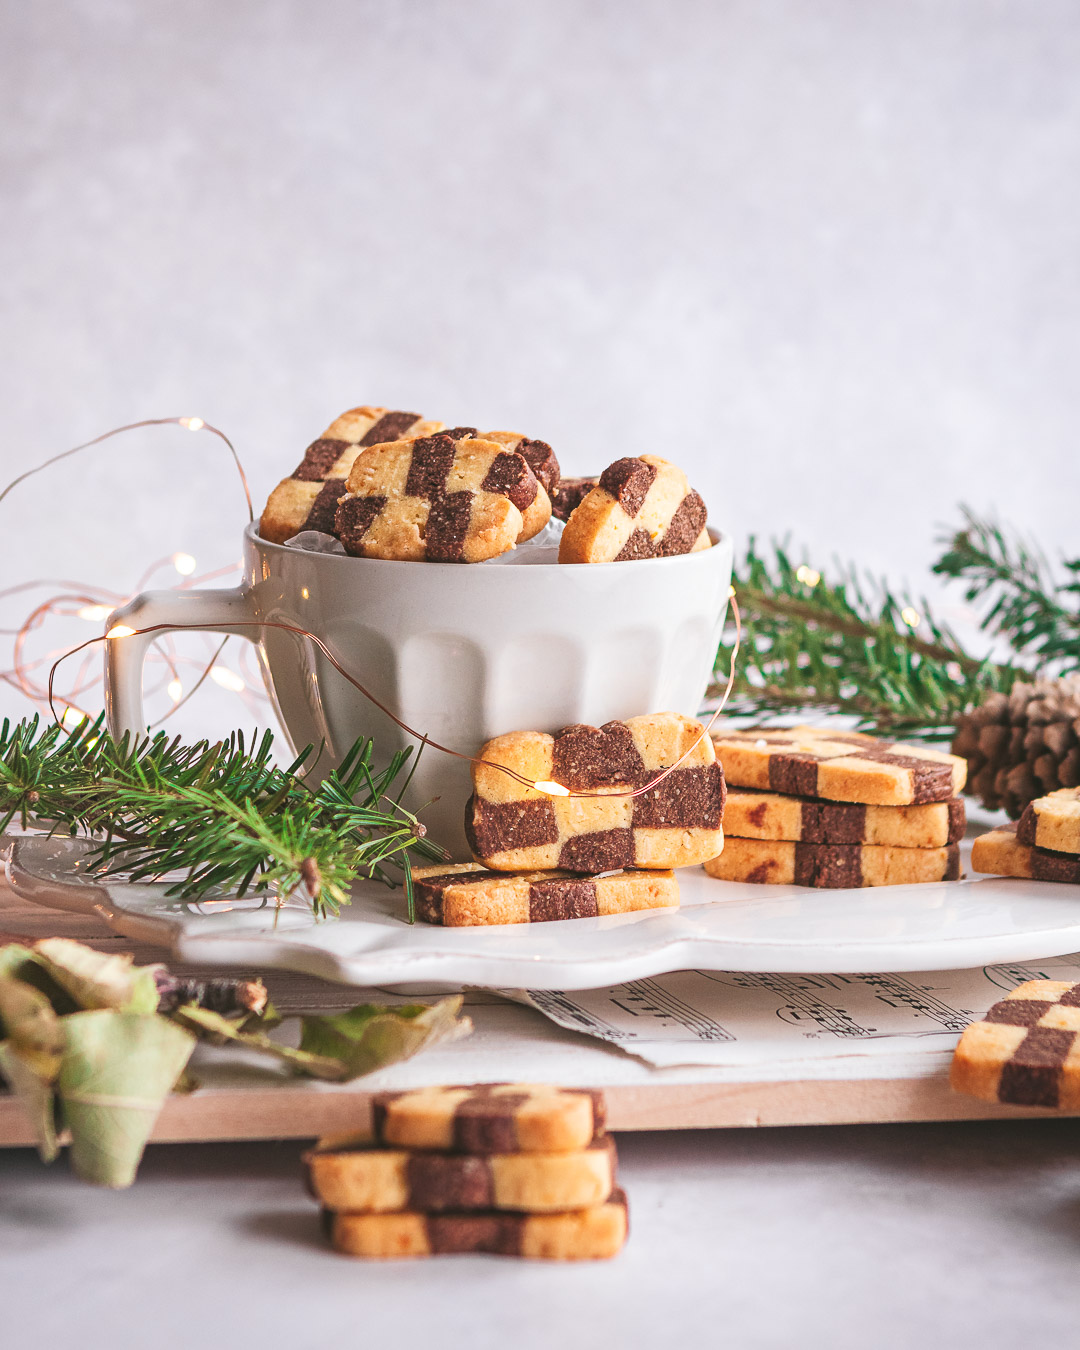 Homemade] Vanilla-Orange and Ginger-Chocolate Checkerboard Cookies. : r/food